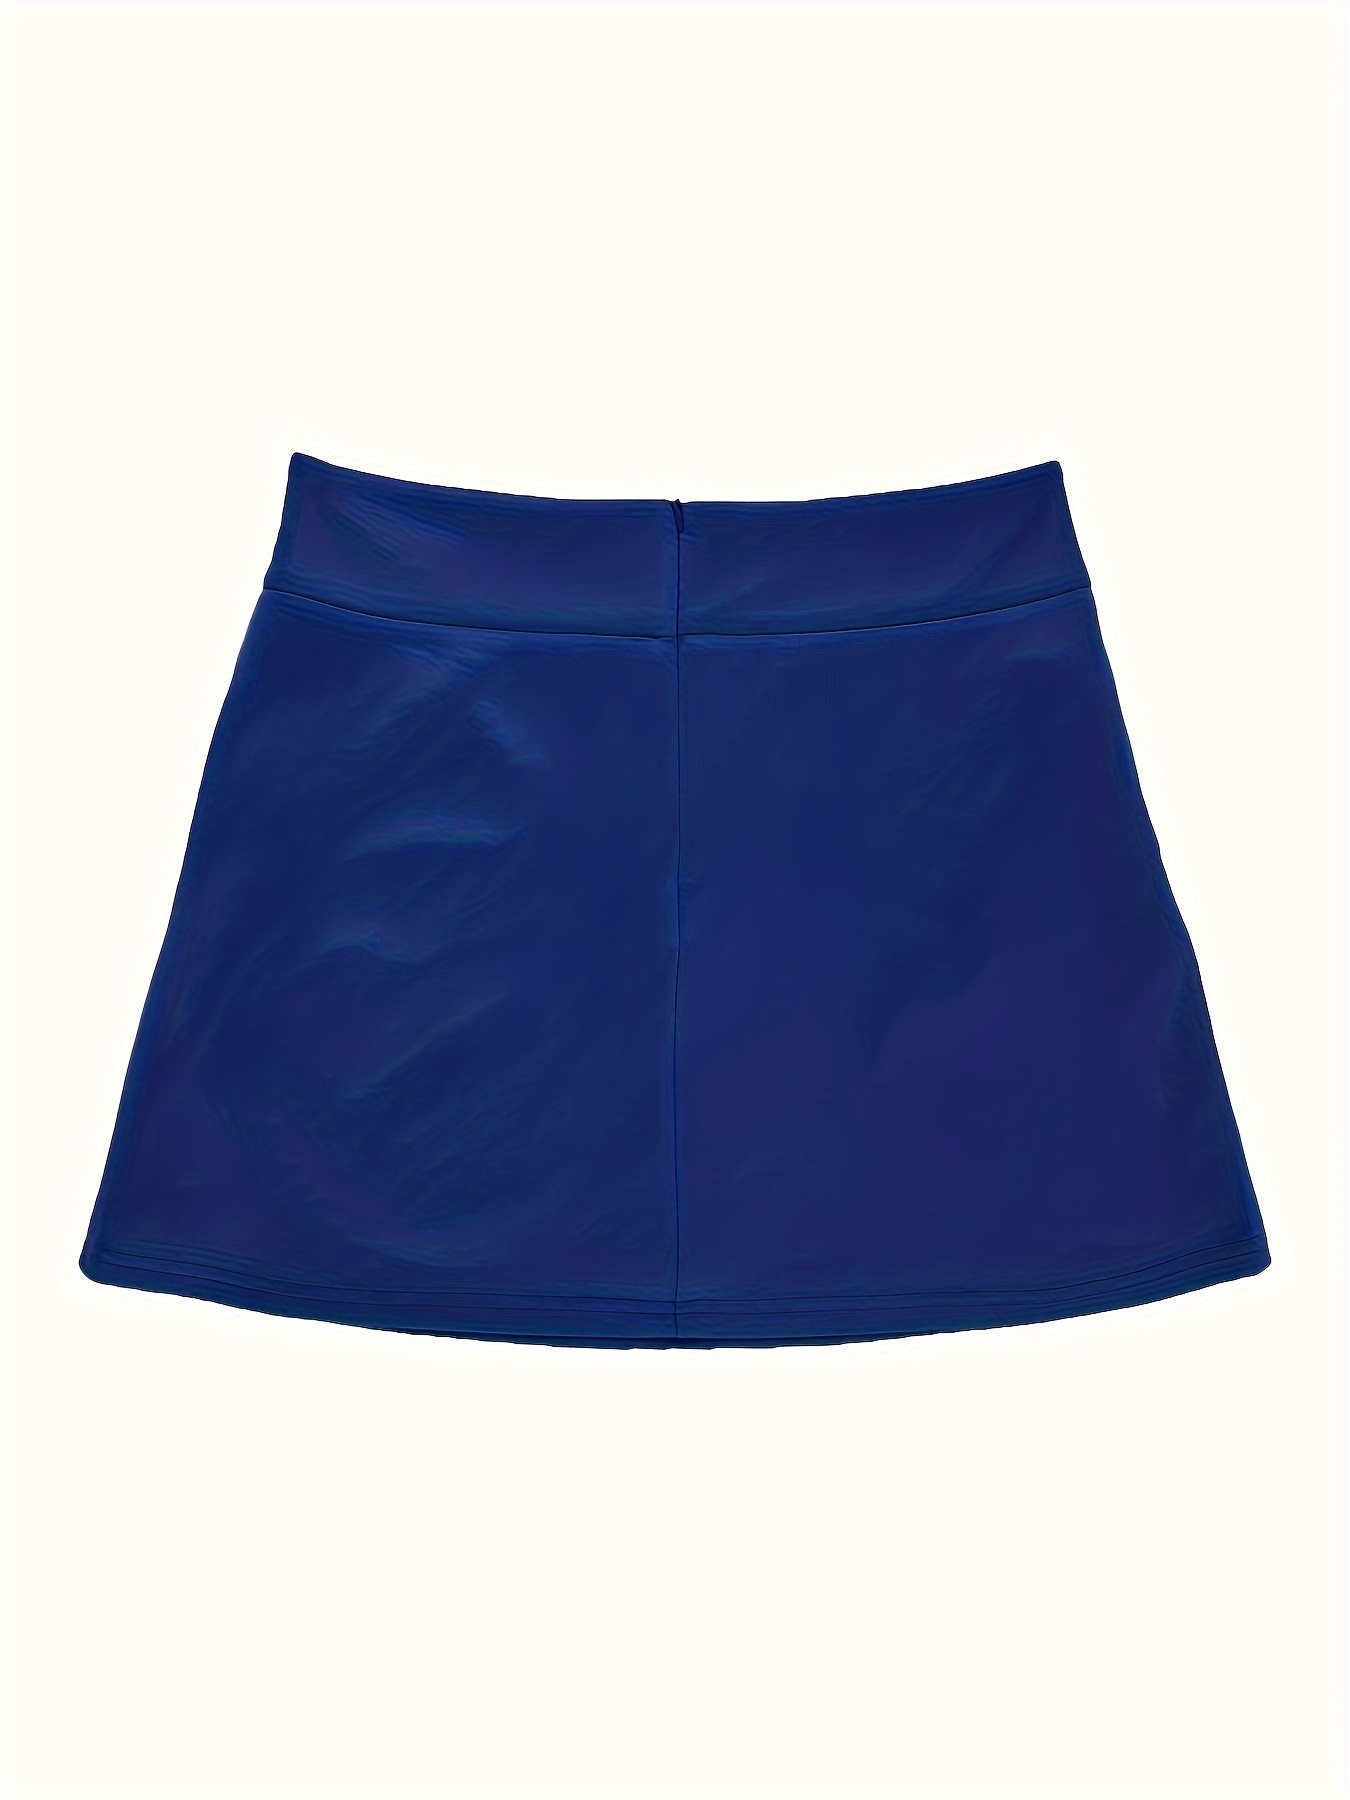 womens sports skirt for running casual active tennis golf skirt womens activewear